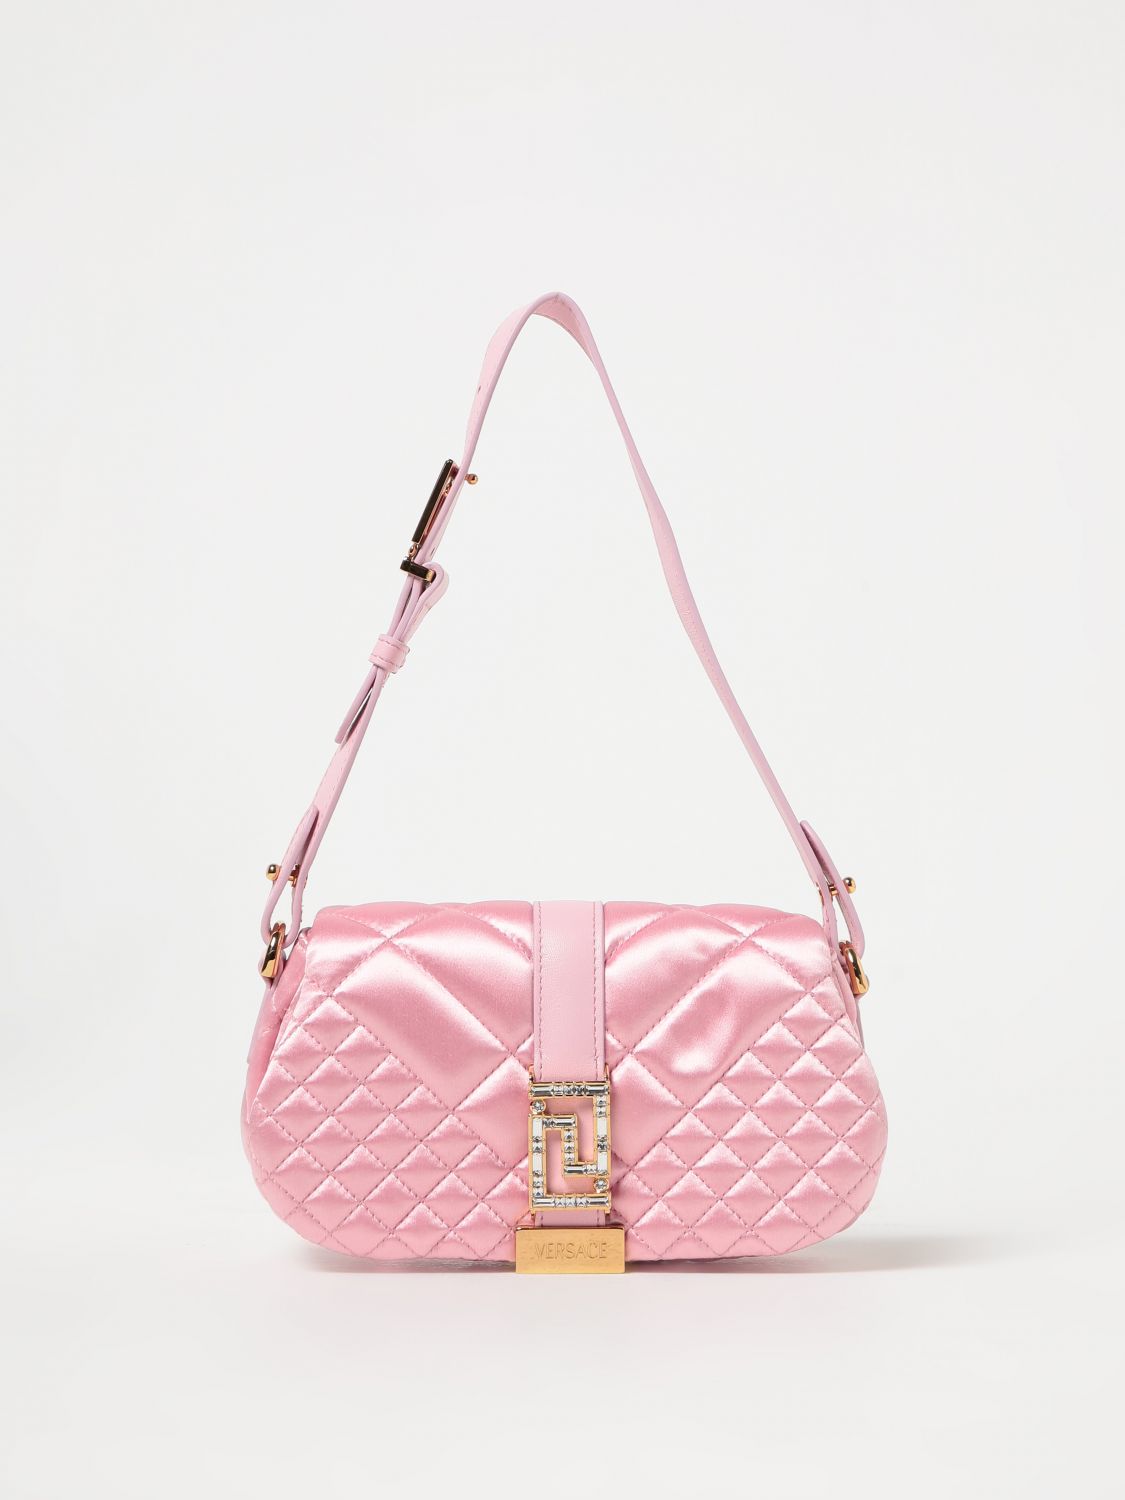 Versace Jeans Couture Pink Satin Shoulder Bag Versace